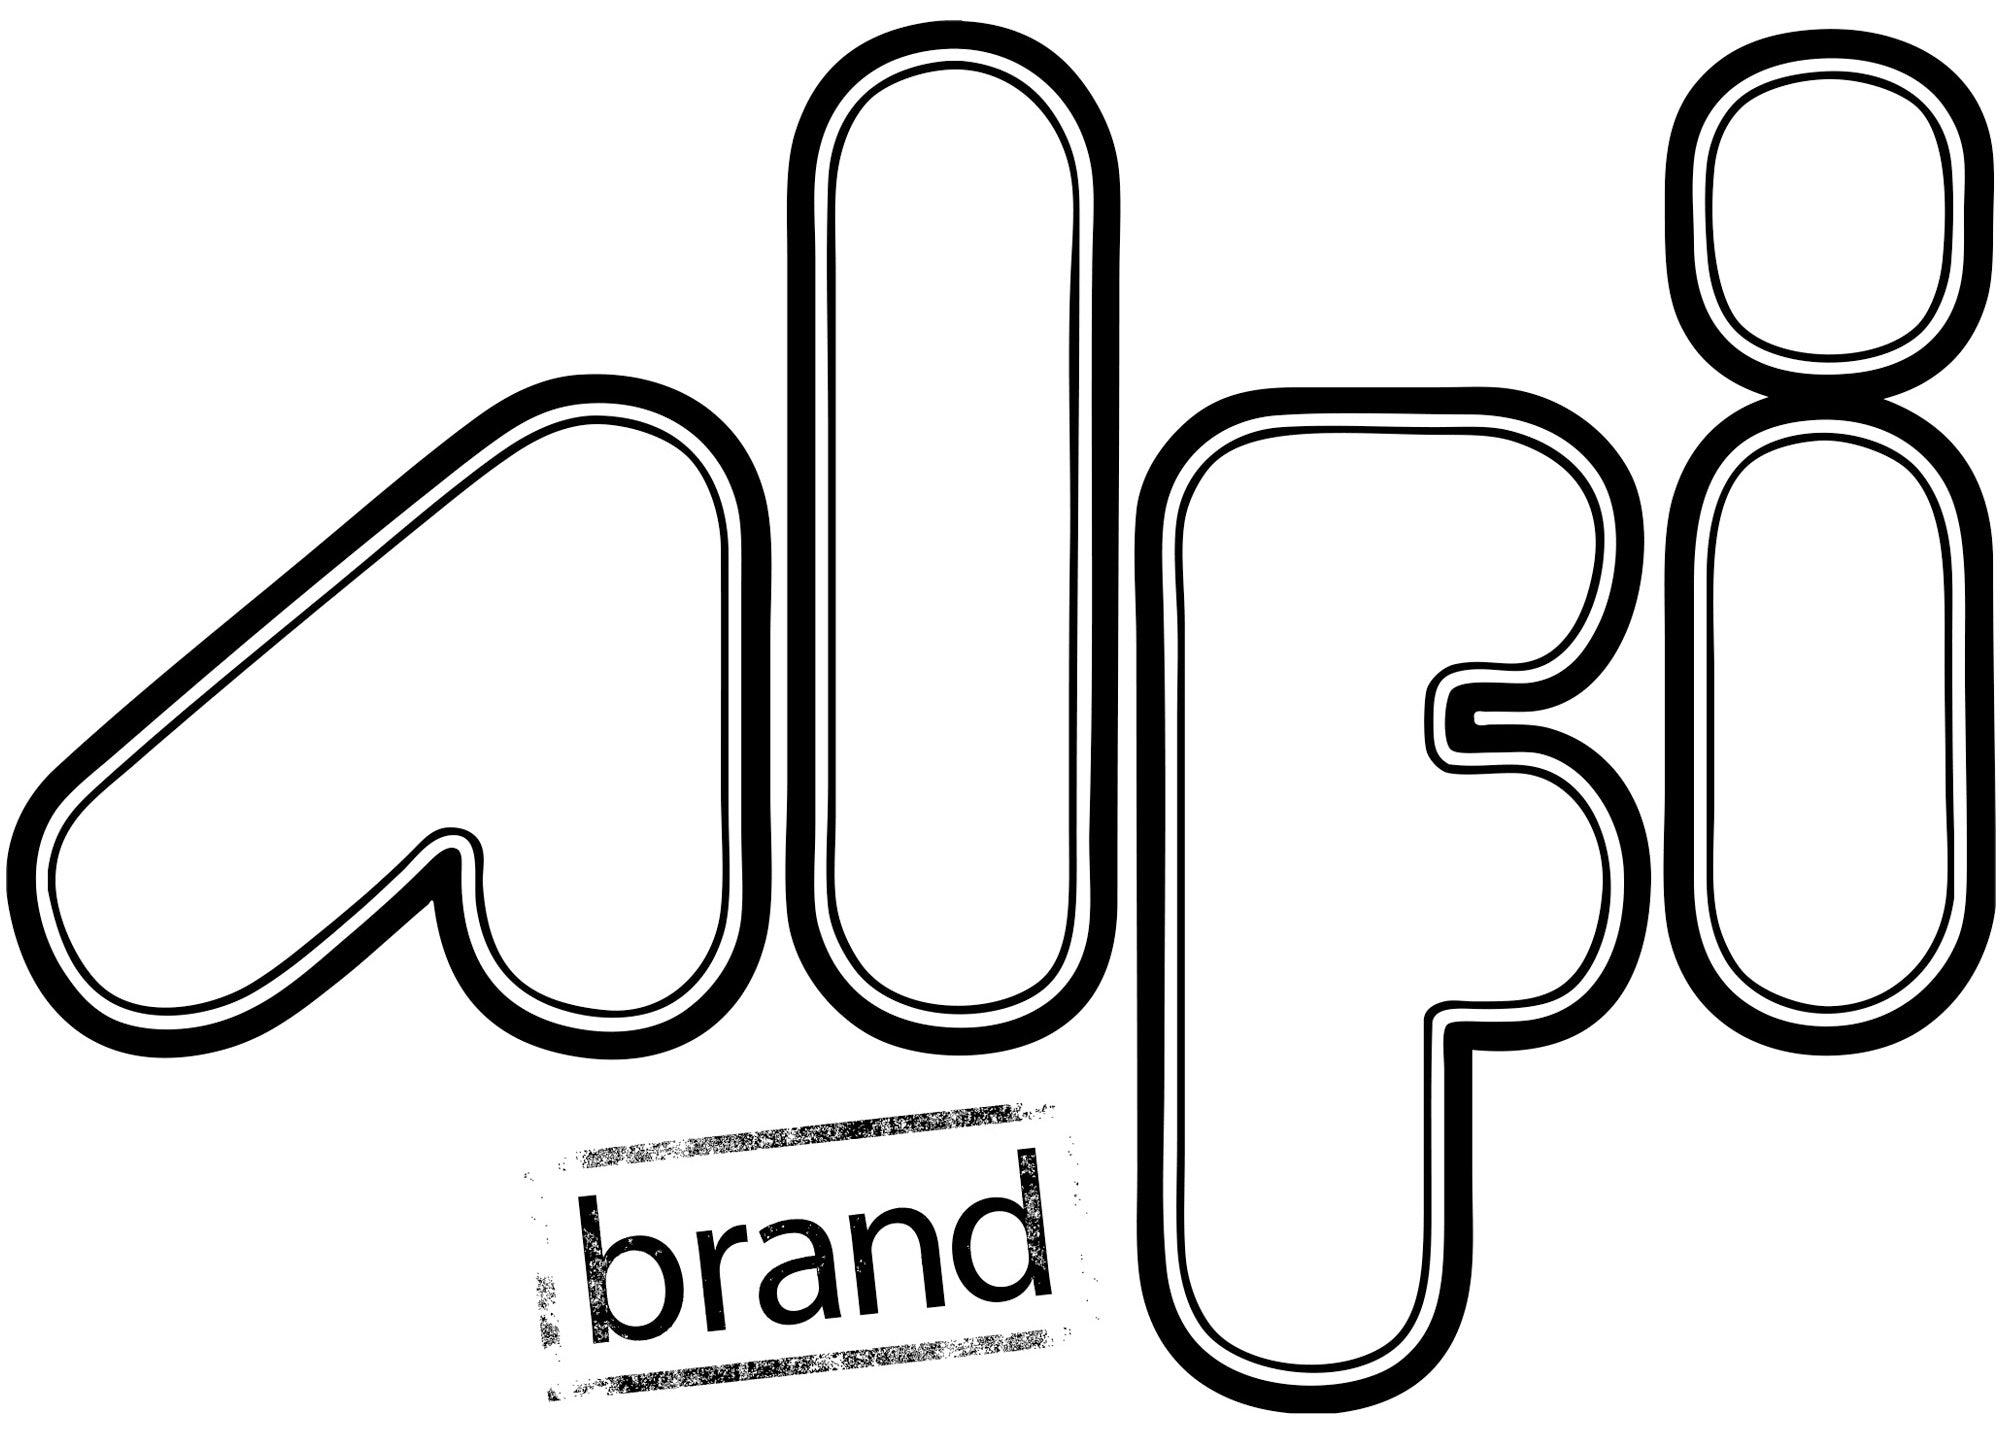 ALFI Brand - Polished Chrome 23 inch Towel Bar & Shelf Bathroom Accessory | AB9583